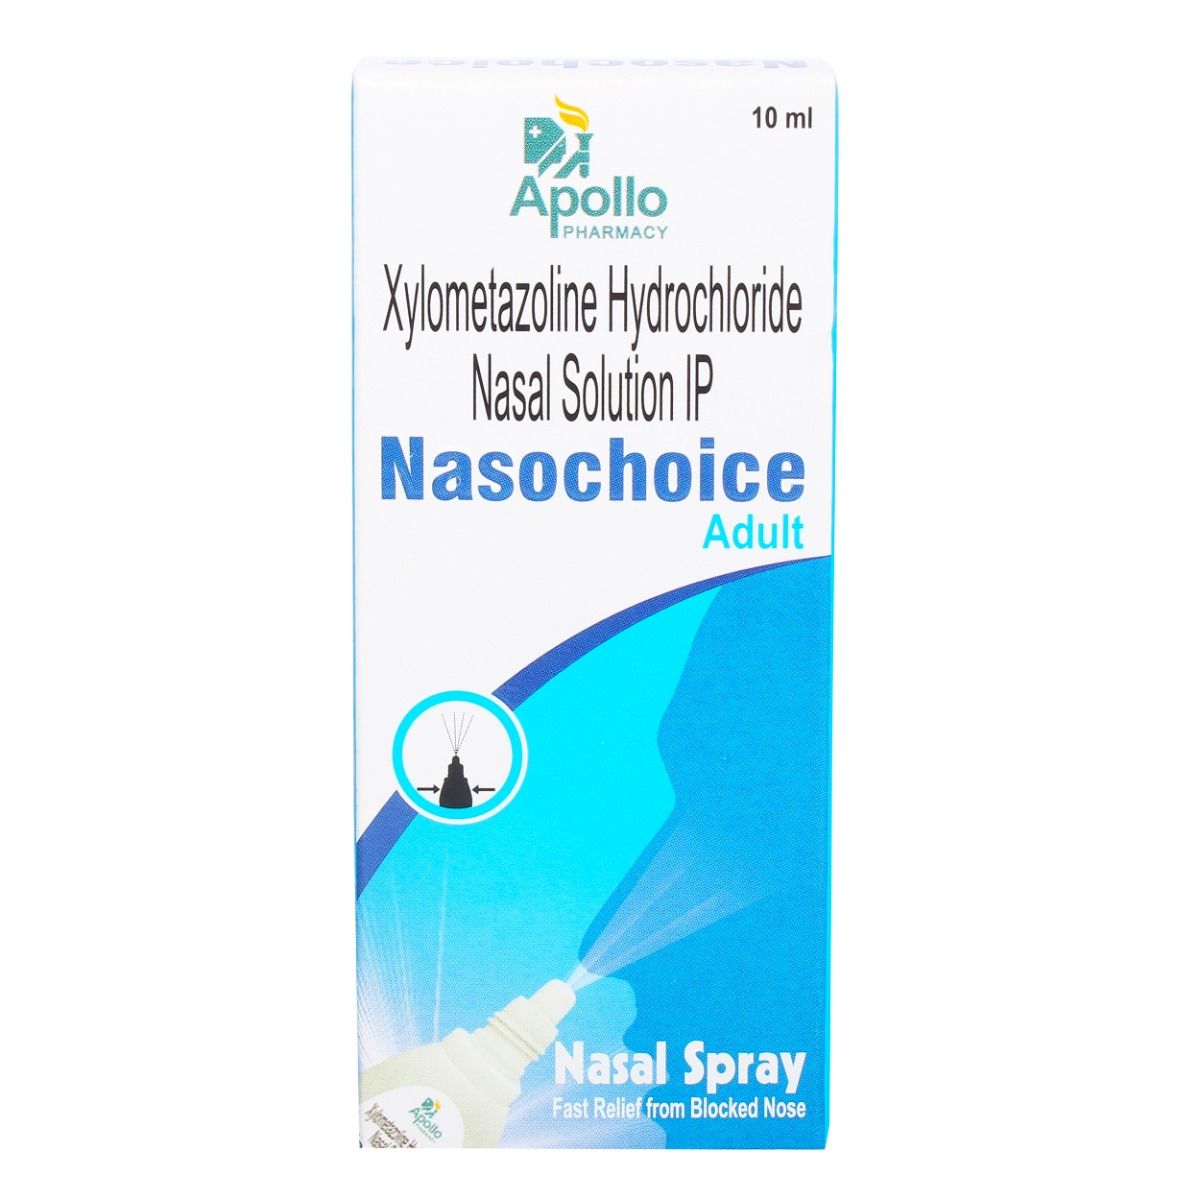 Apollo Pharmacy Nasochoice Adult Nasal Spray, 10 ml, Pack of 1 